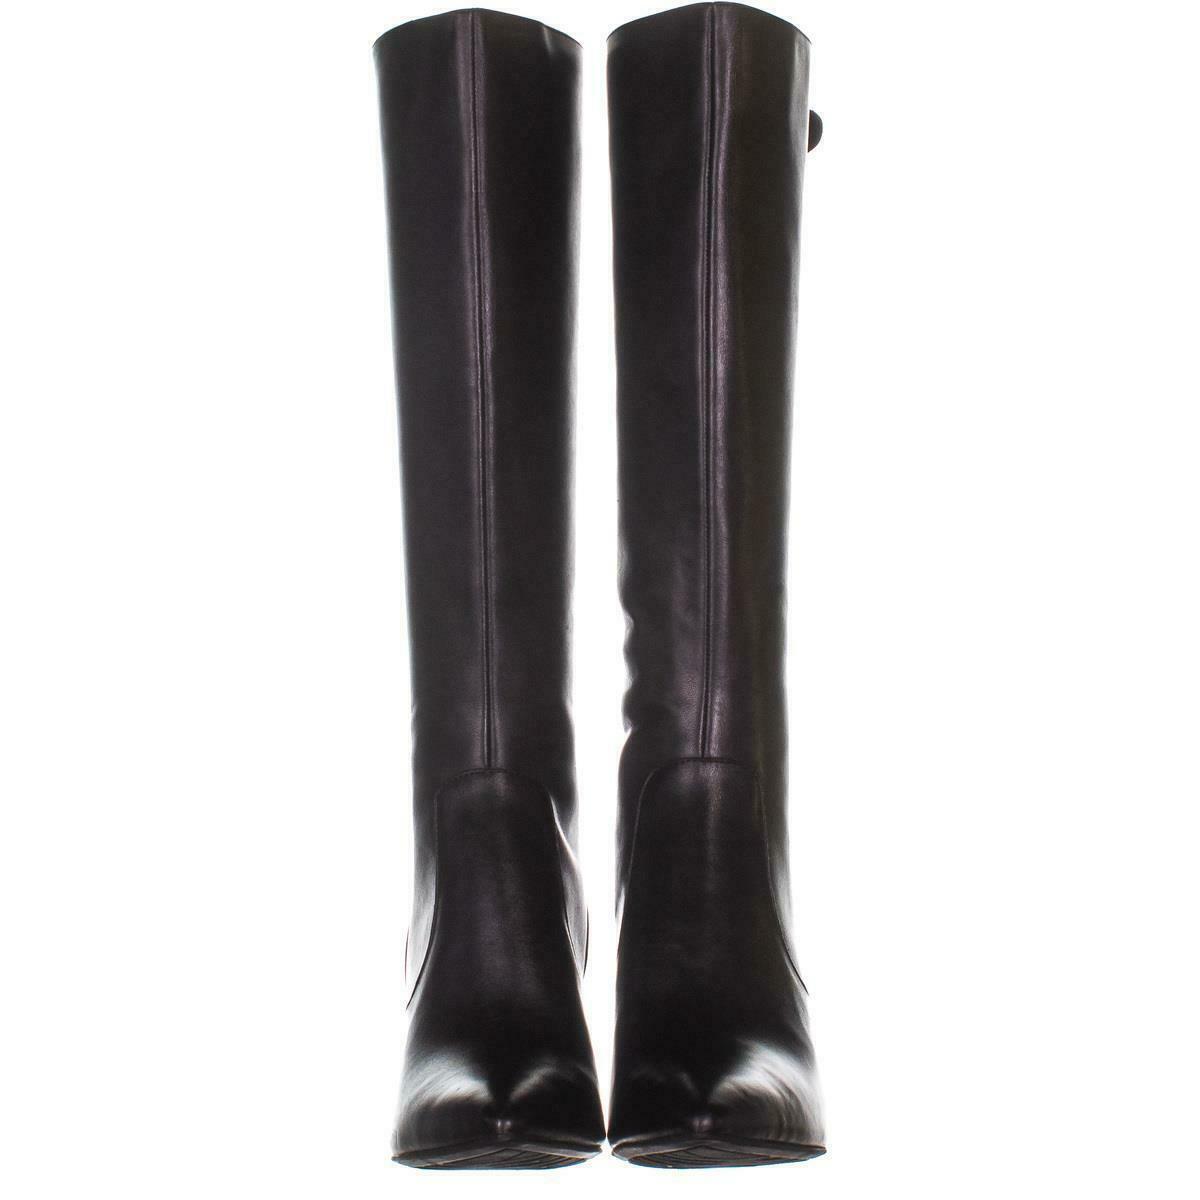 Anne Klein Fliss Knee High Side Buckle Boots 939, Black, 8 US - Boots